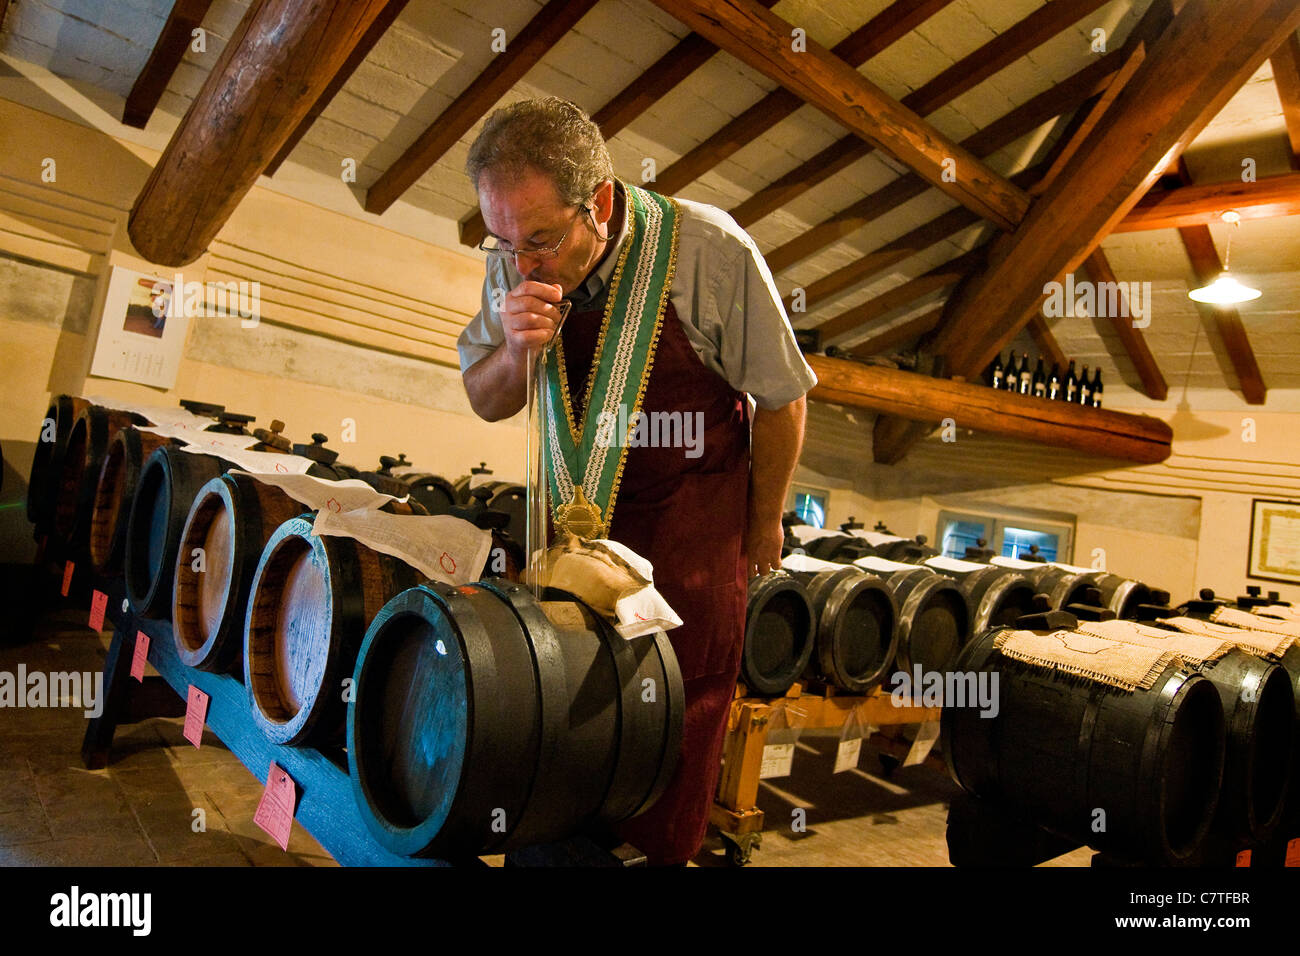 Italy, Emilia Romagna, Modena, expert Roberto Chierici tasting balsamic vinegar from barrels Stock Photo